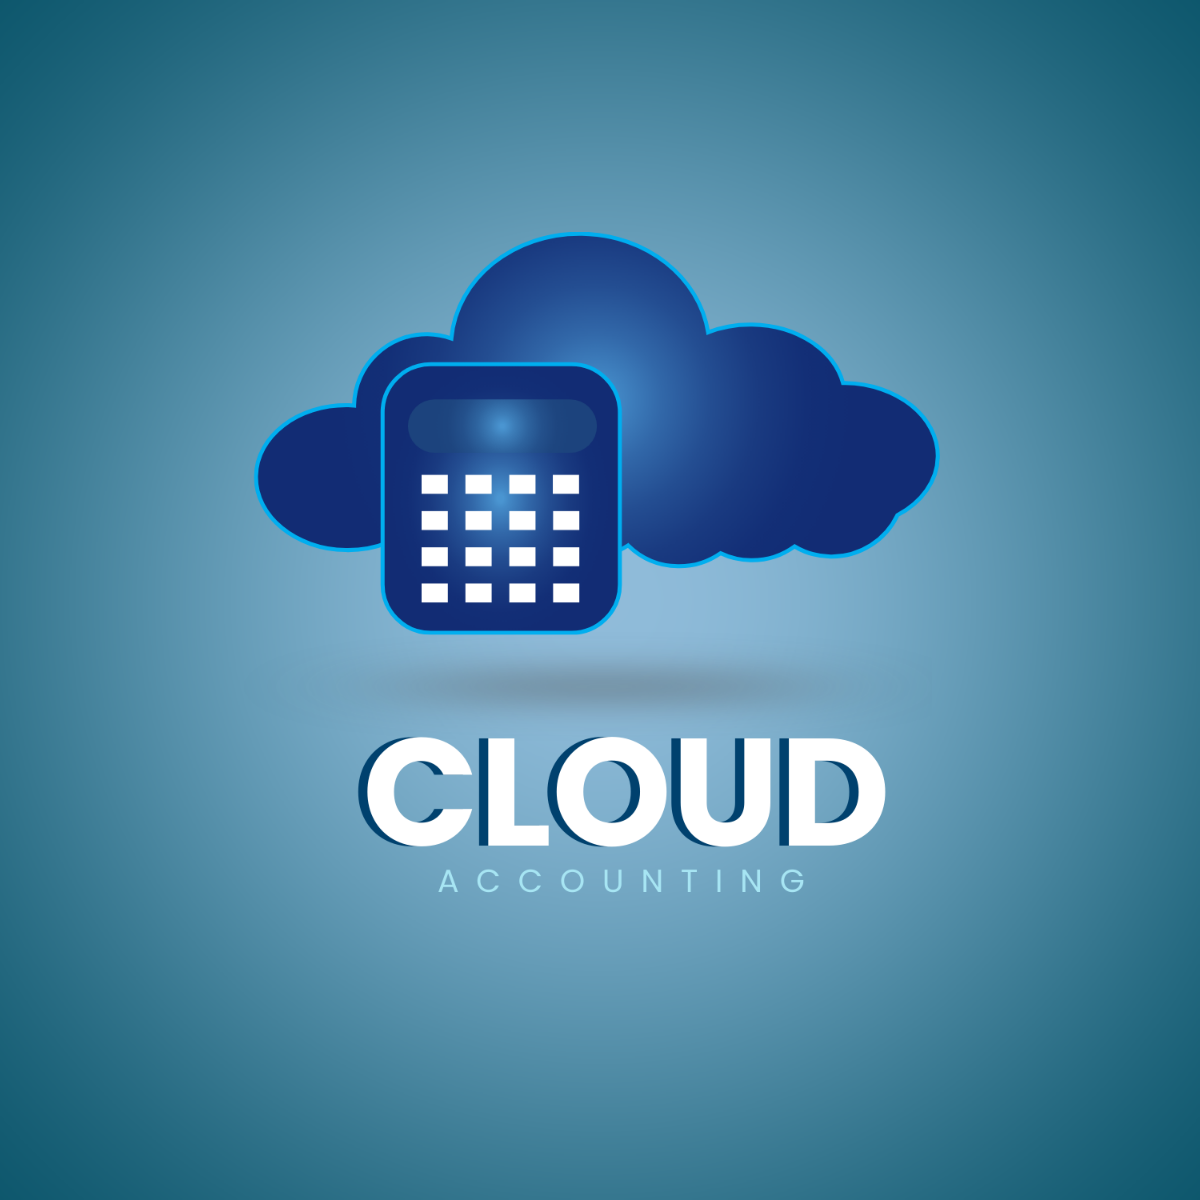 Cloud Accounting Cloud Logo Template